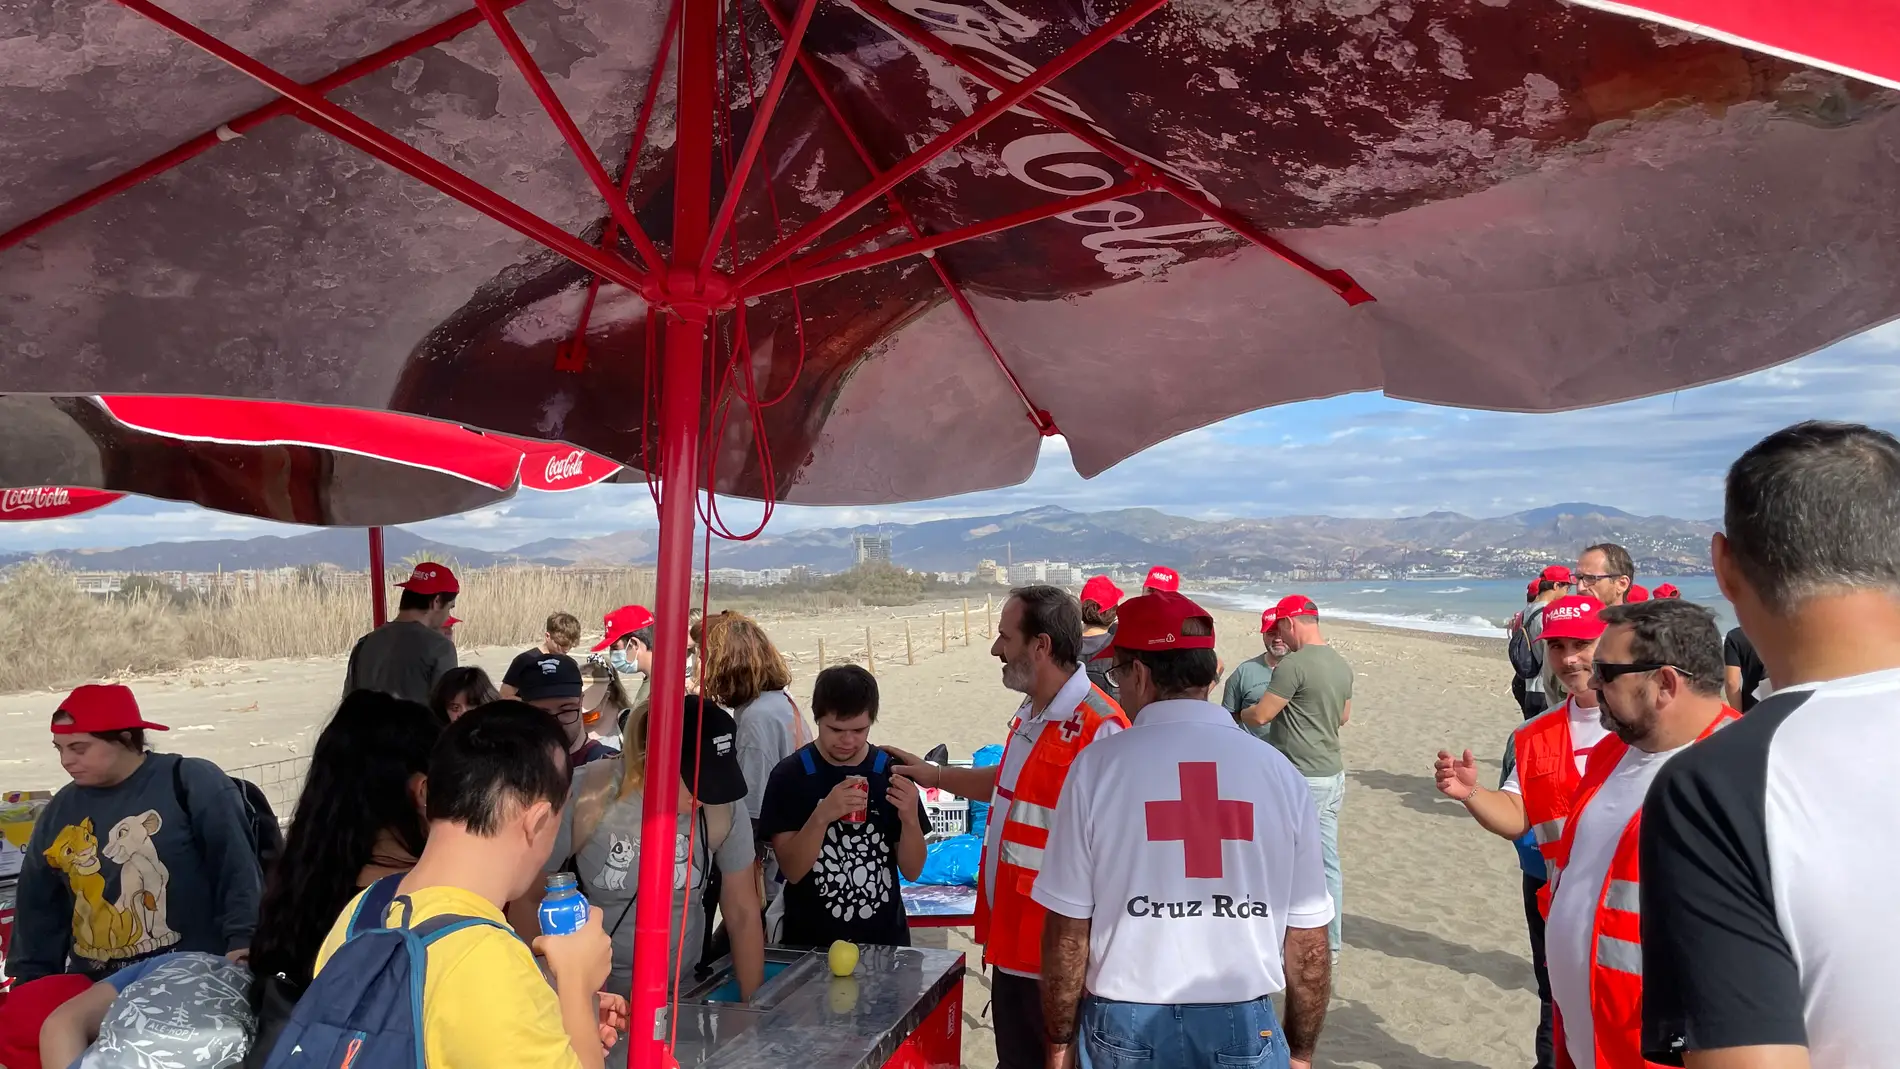 100 voluntarios limpian la playa de la Desembocadura del Guadalhorce